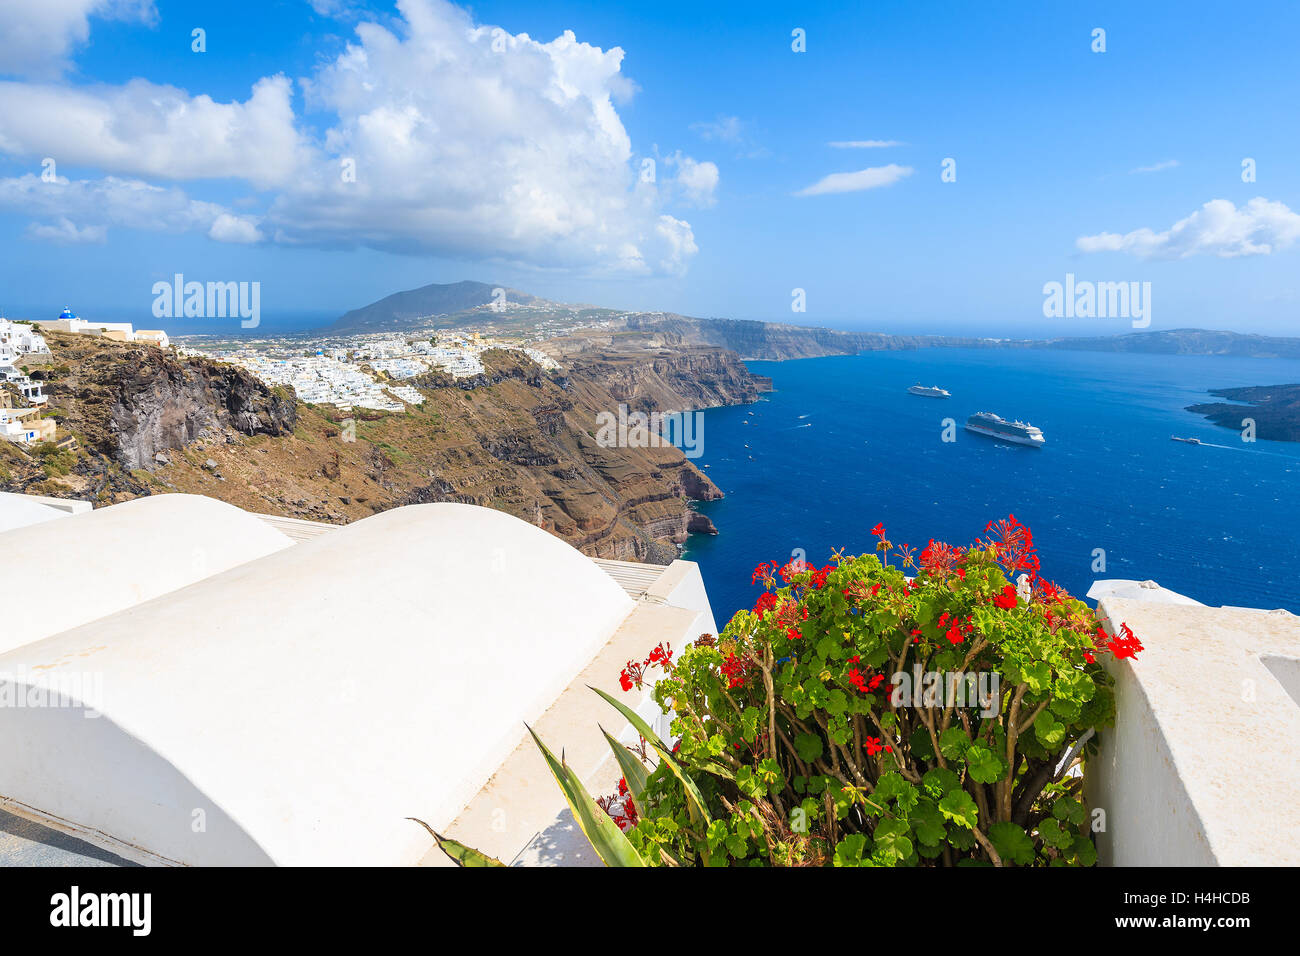 View of beautiful Firostefani village with typical white Greek architecture, Santorini island, Greece Stock Photo